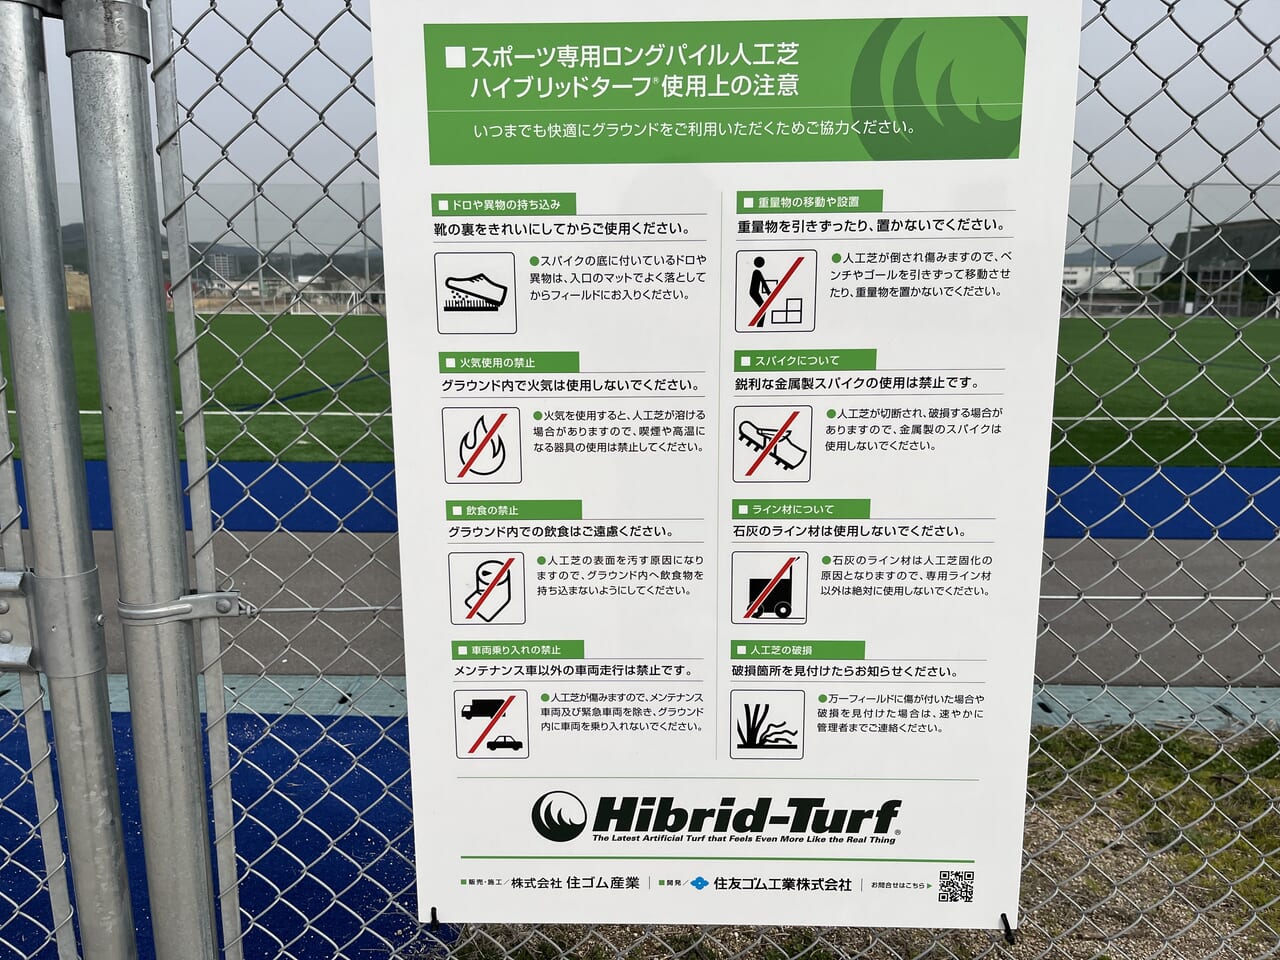 東尾道多目的競技場の芝生利用ルール